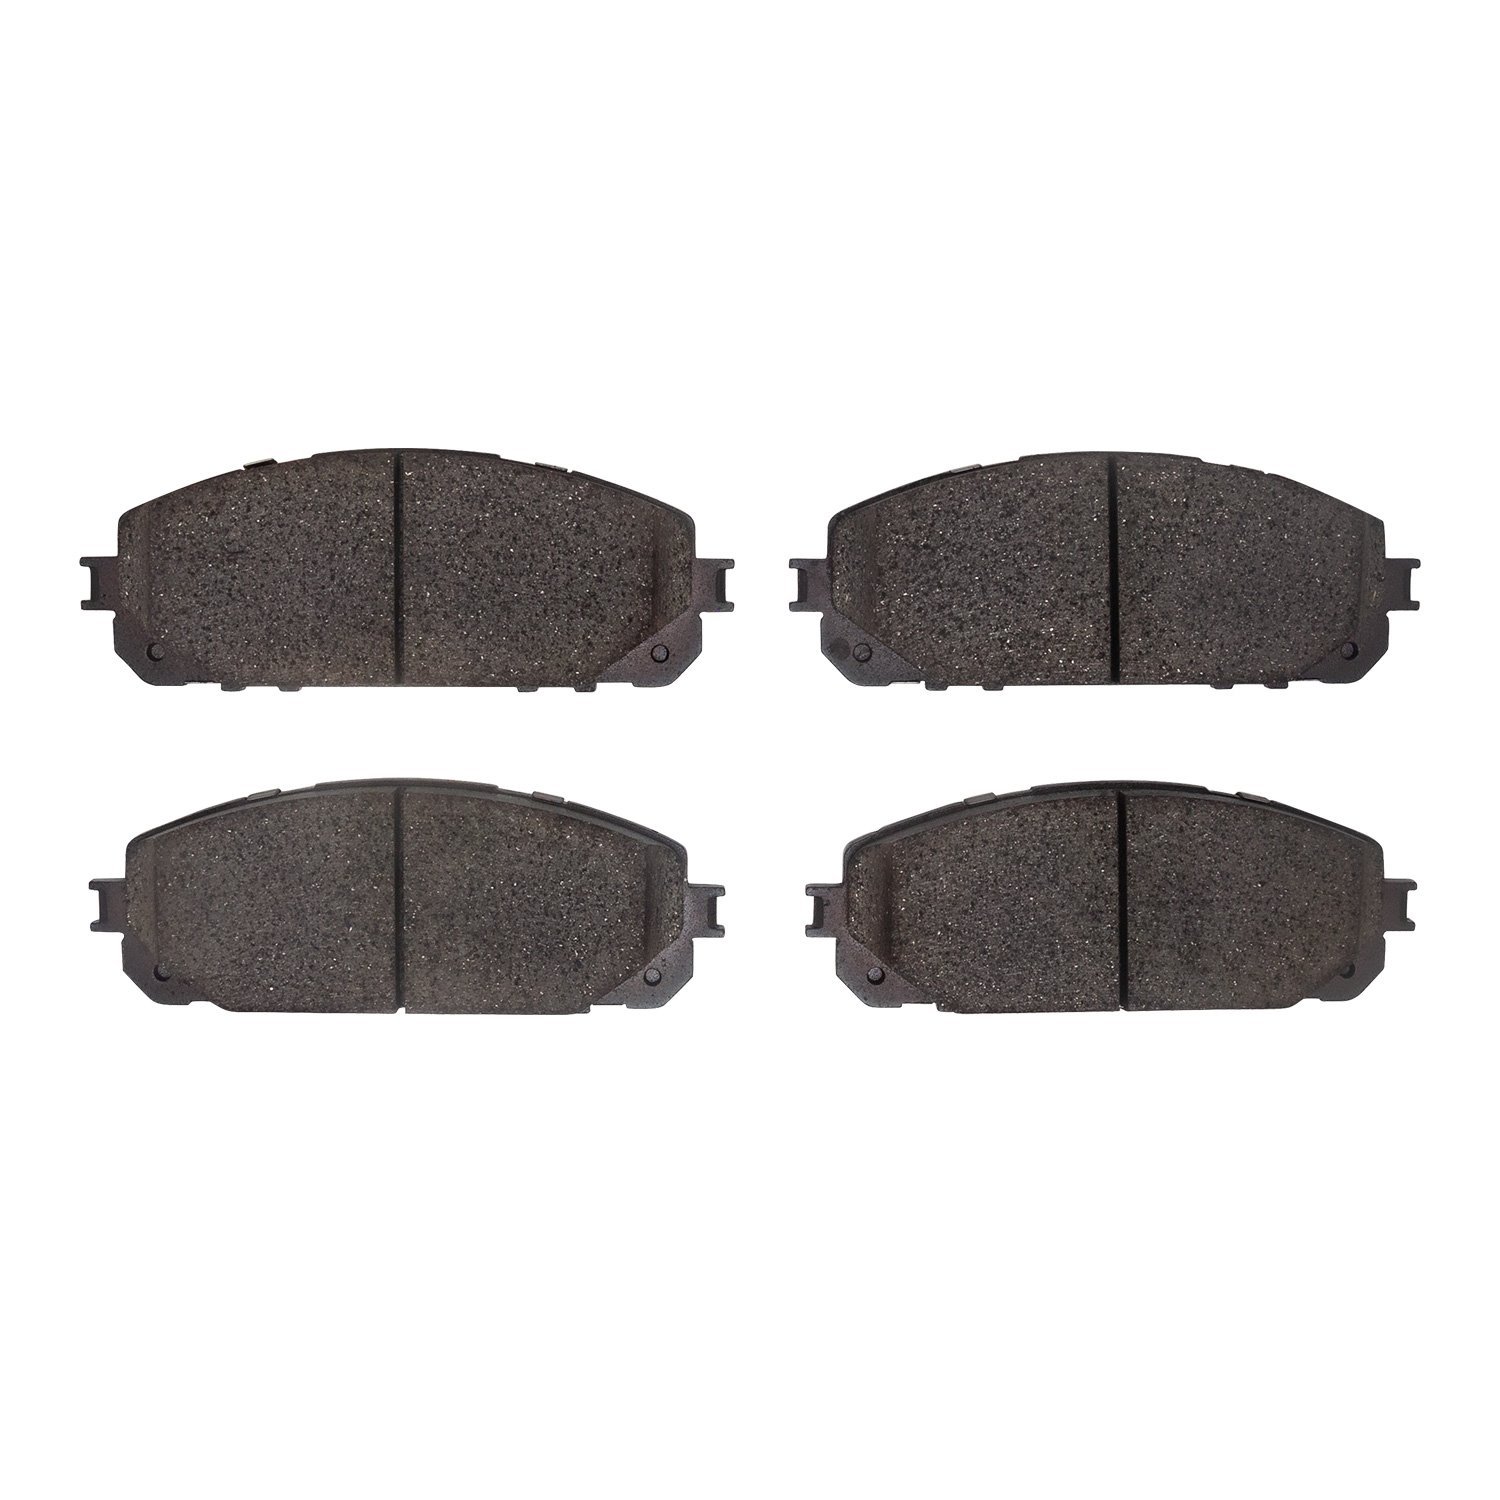 1600-1843-00 5000 Euro Ceramic Brake Pads, Fits Select Mopar, Position: Front